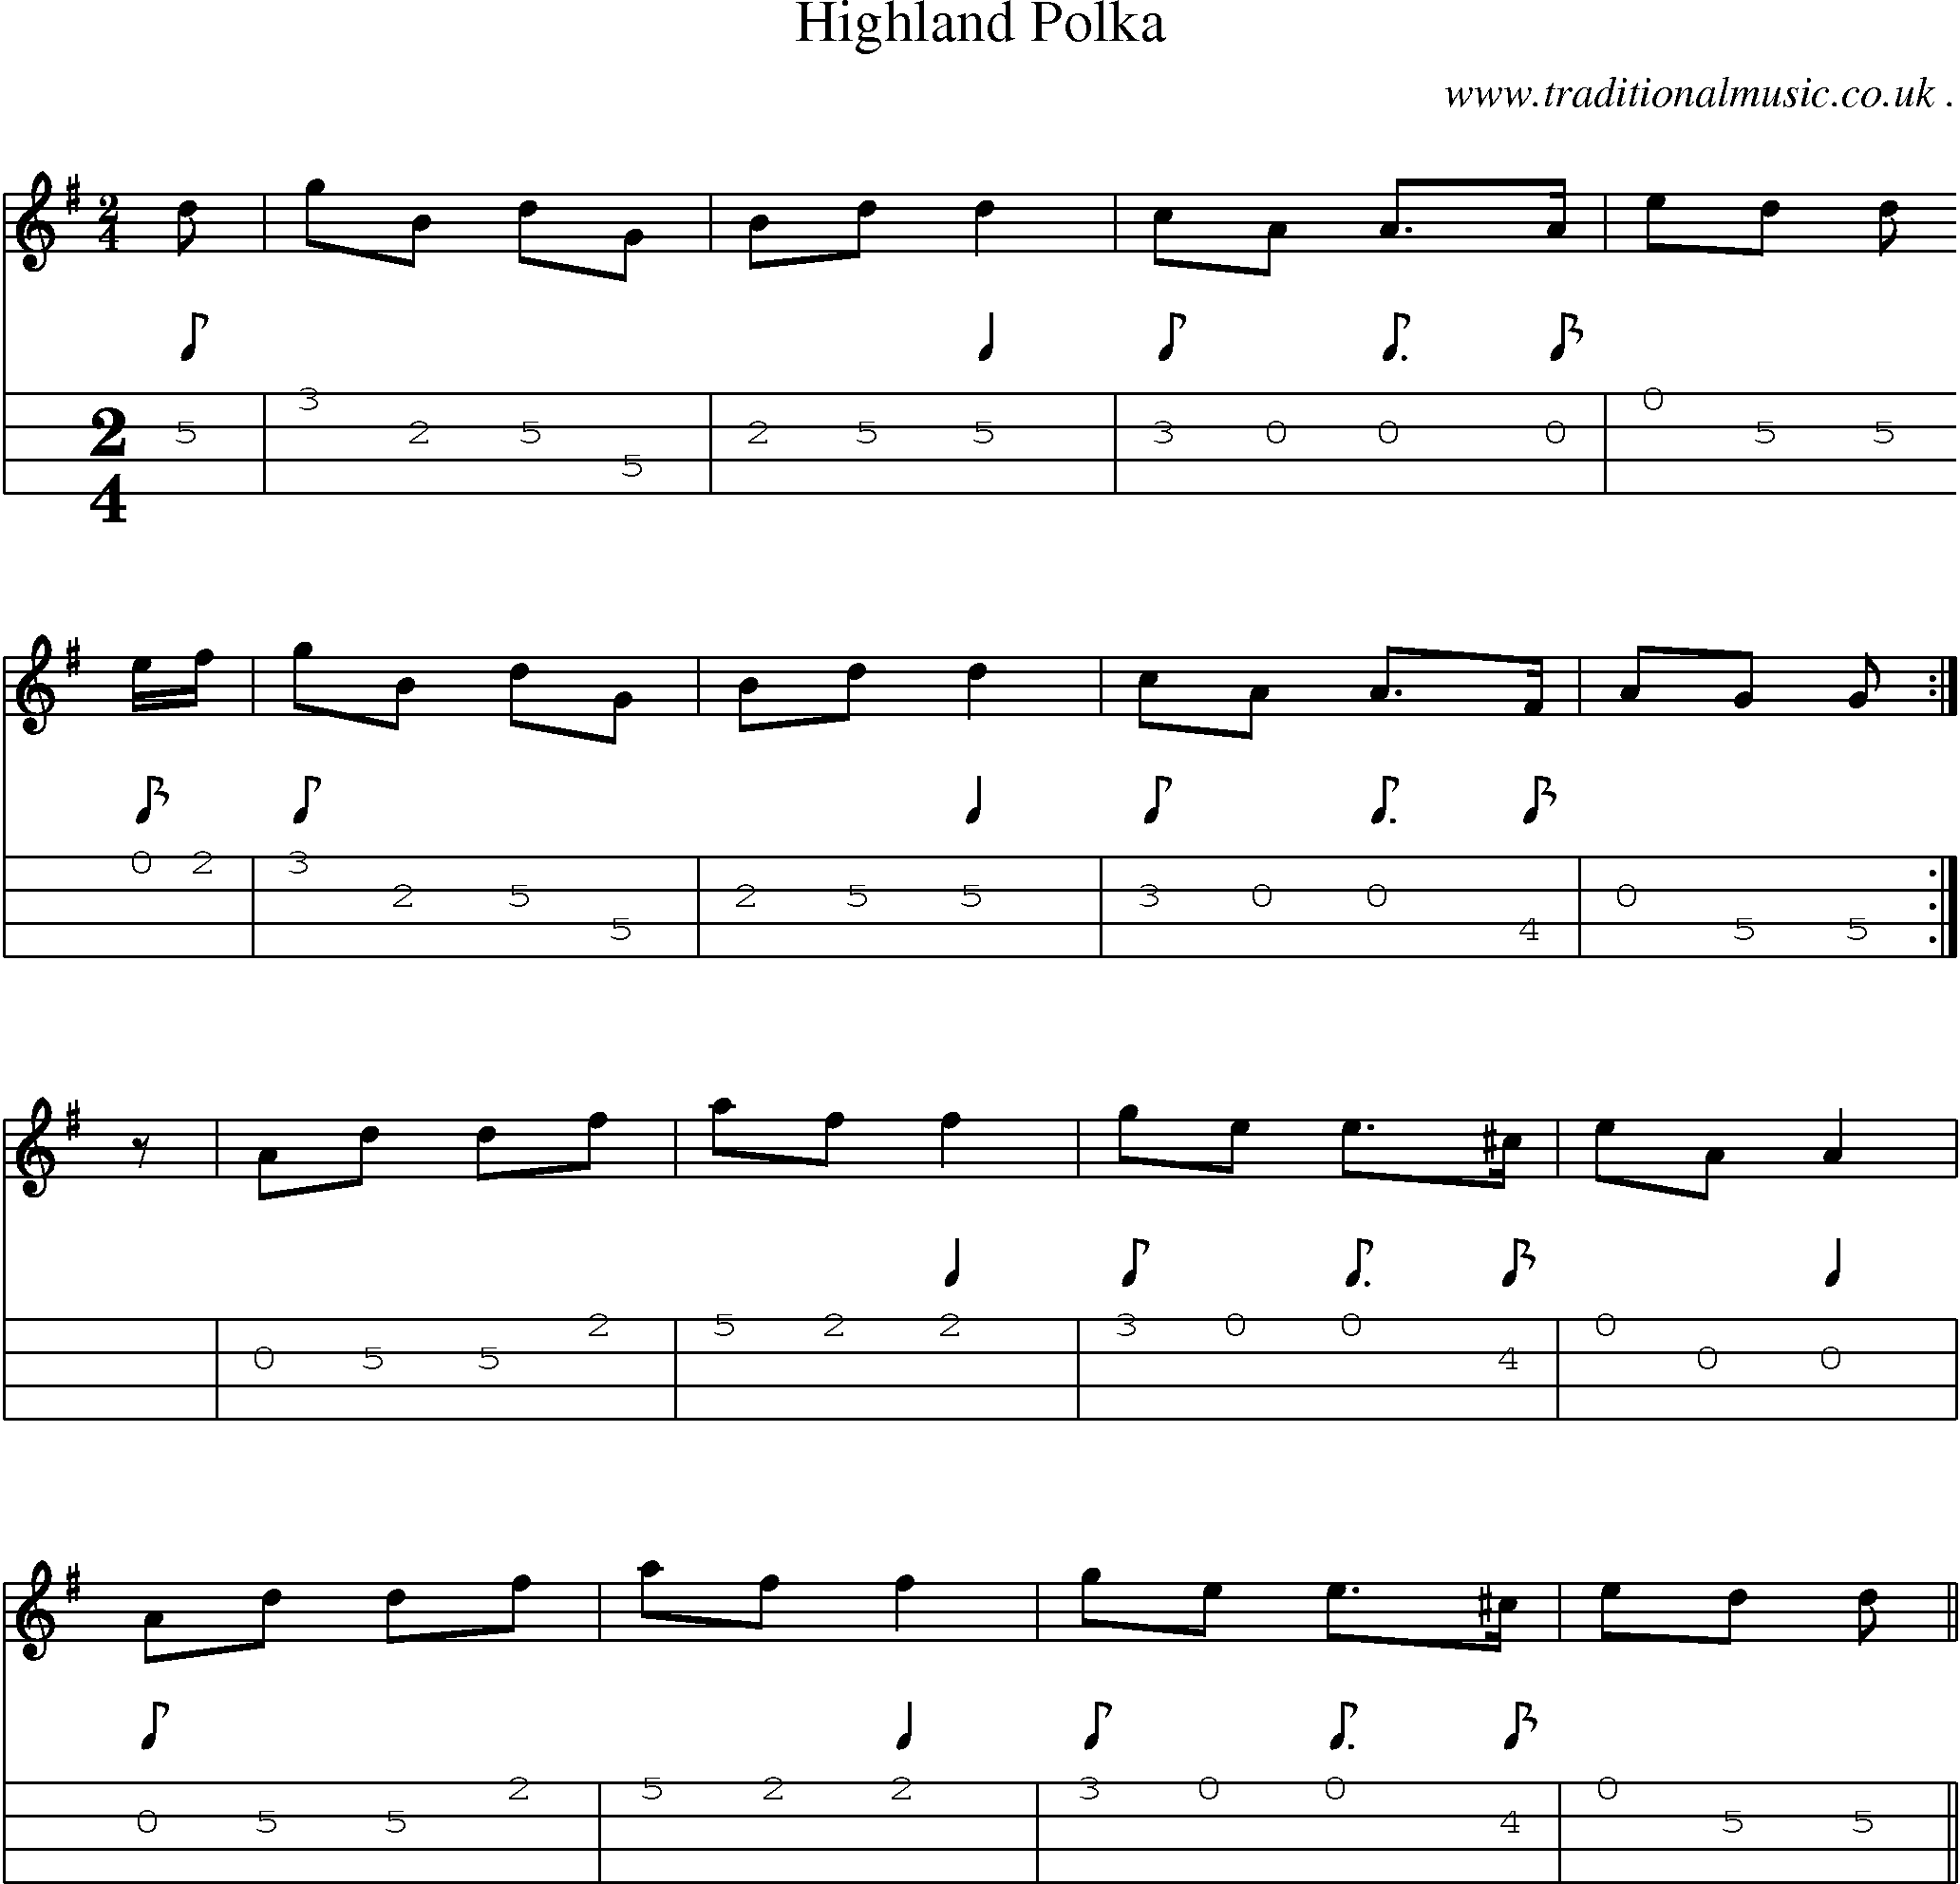 Sheet-music  score, Chords and Mandolin Tabs for Highland Polka